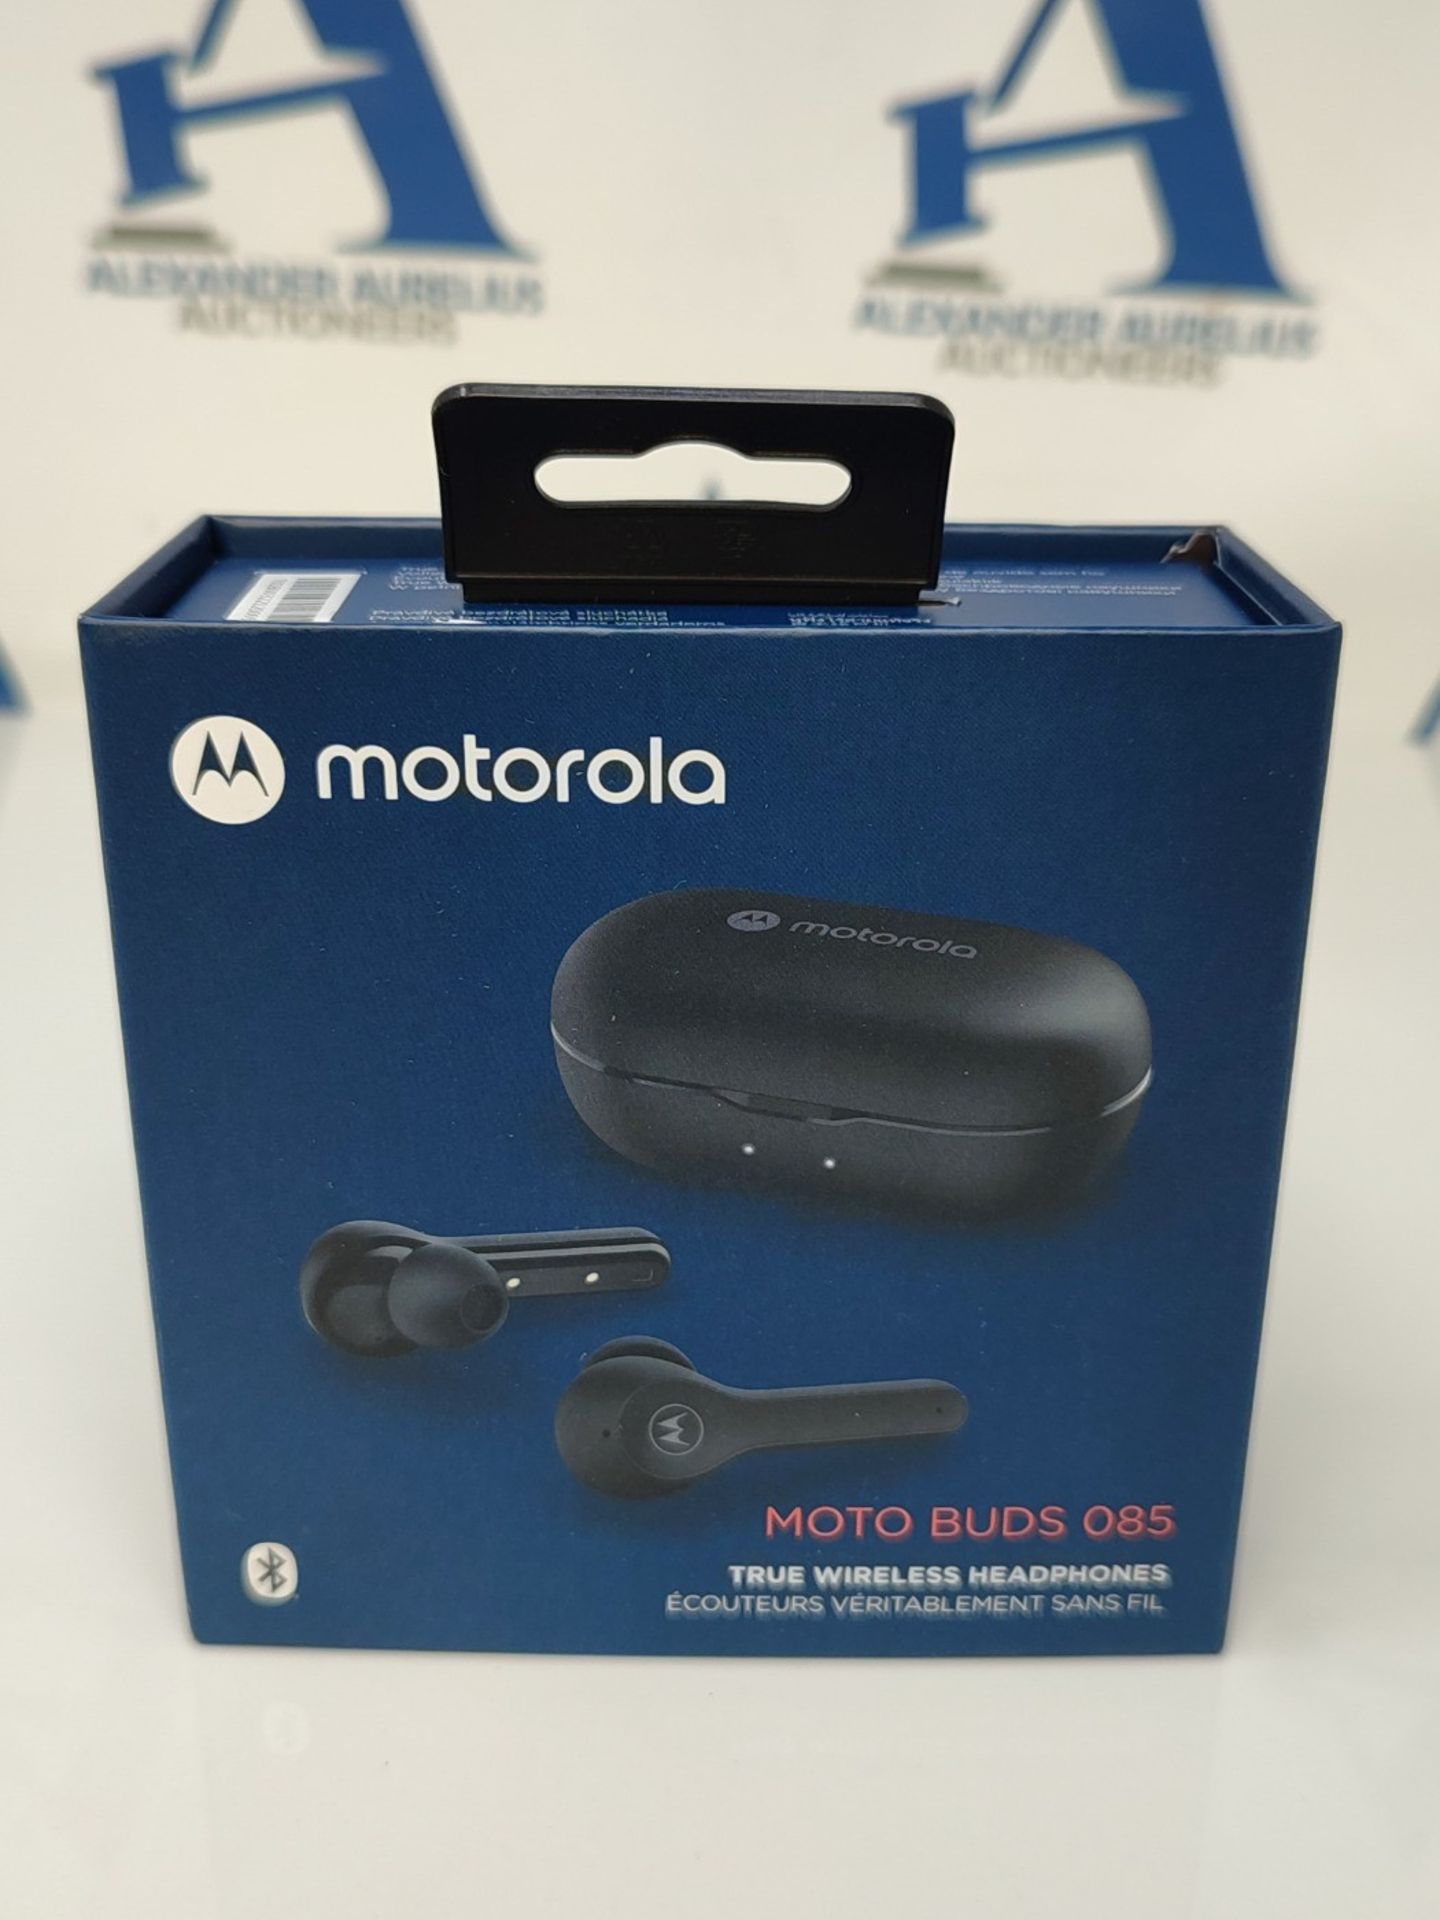 Motorola Sound Moto Buds 085 - Wireless earbuds In-ear headphones, 15 hours of usage, - Image 2 of 3